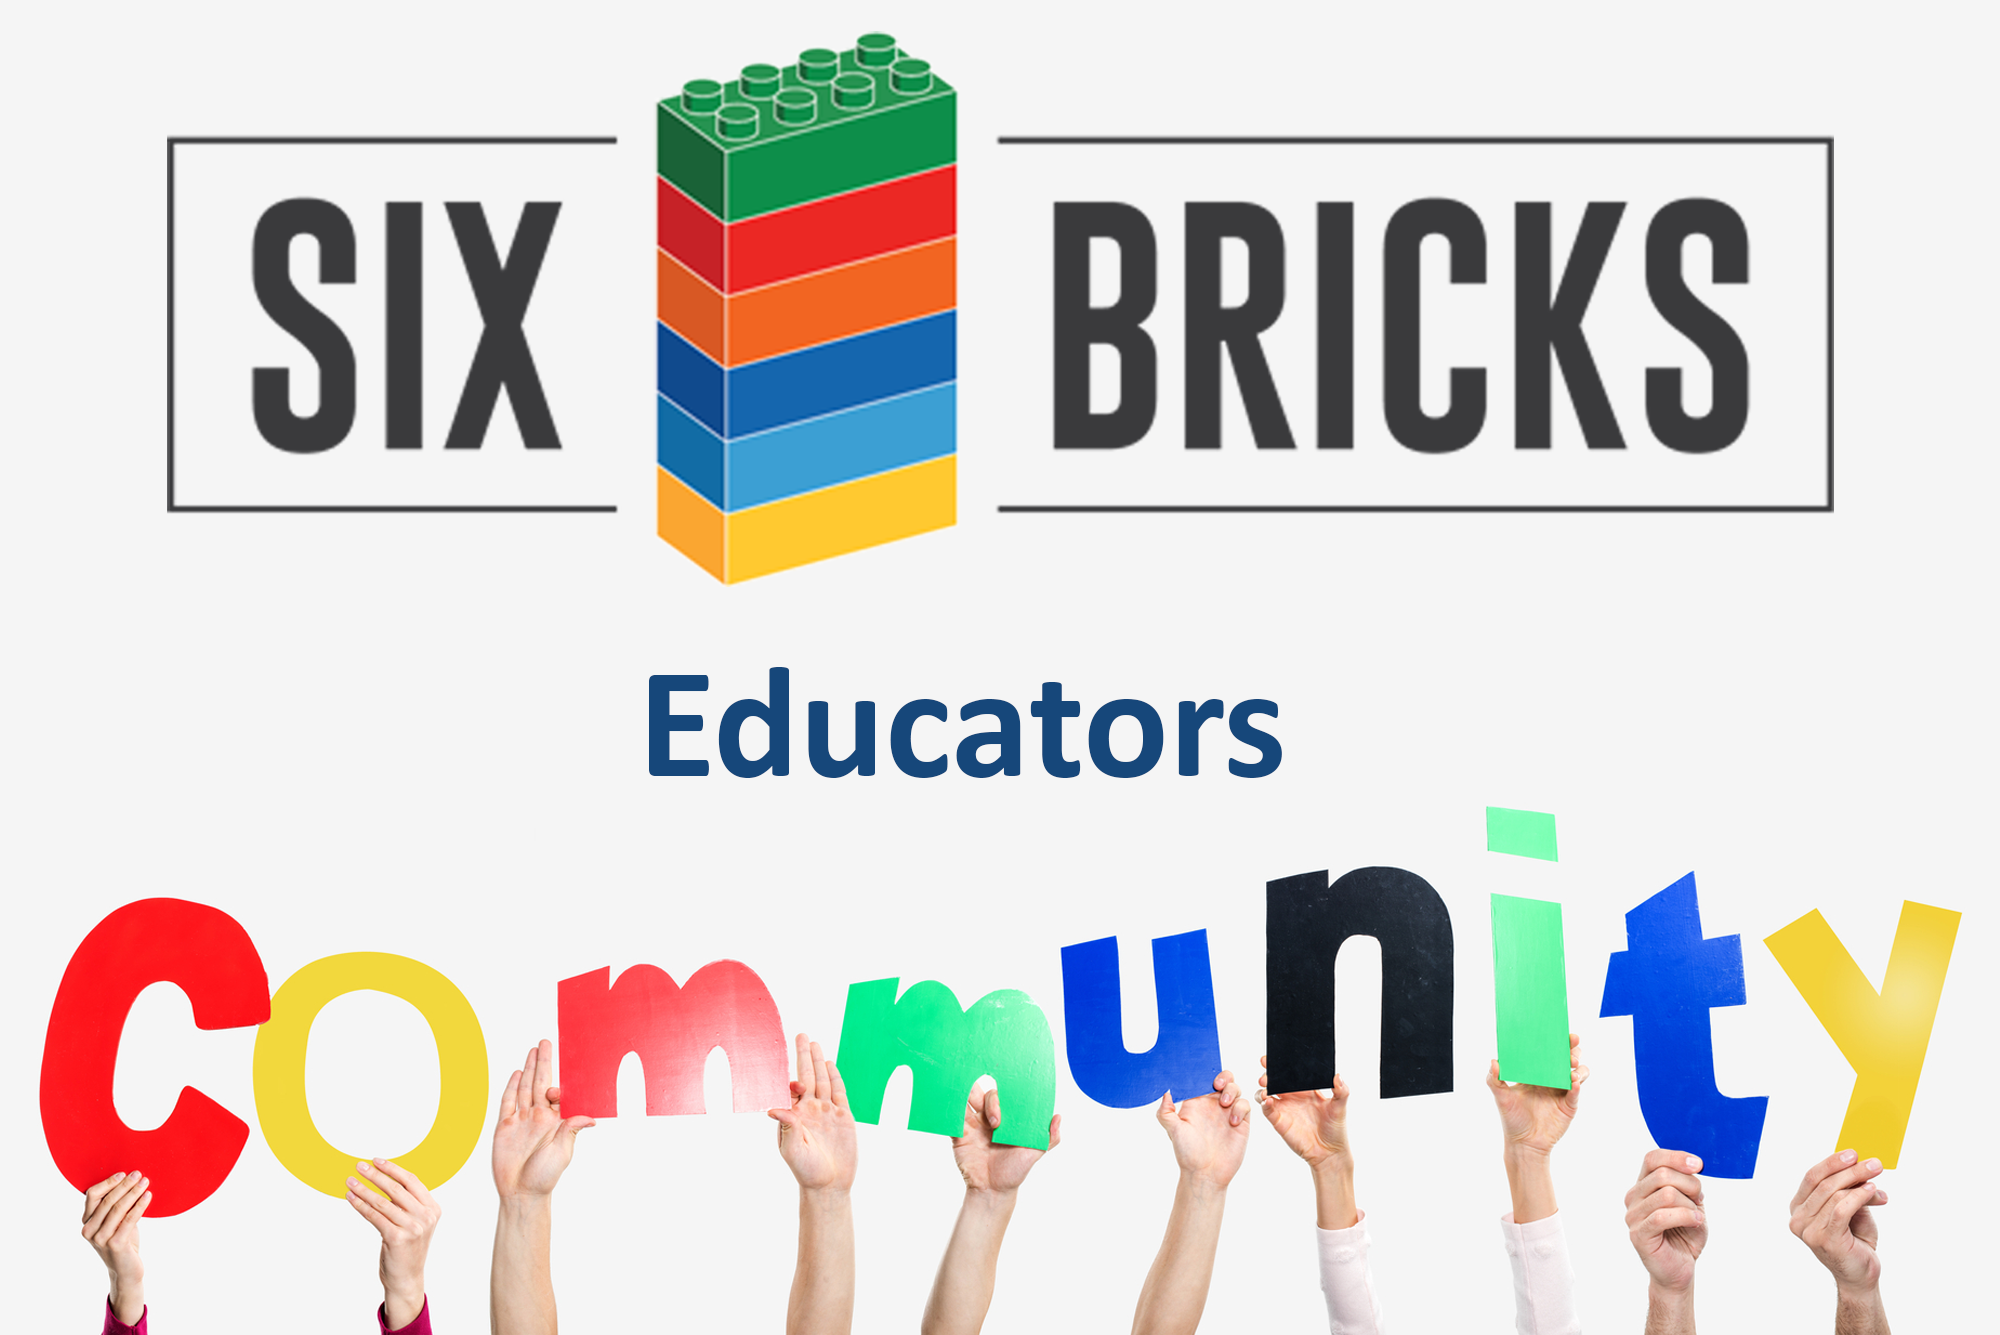 Six Bricks Community